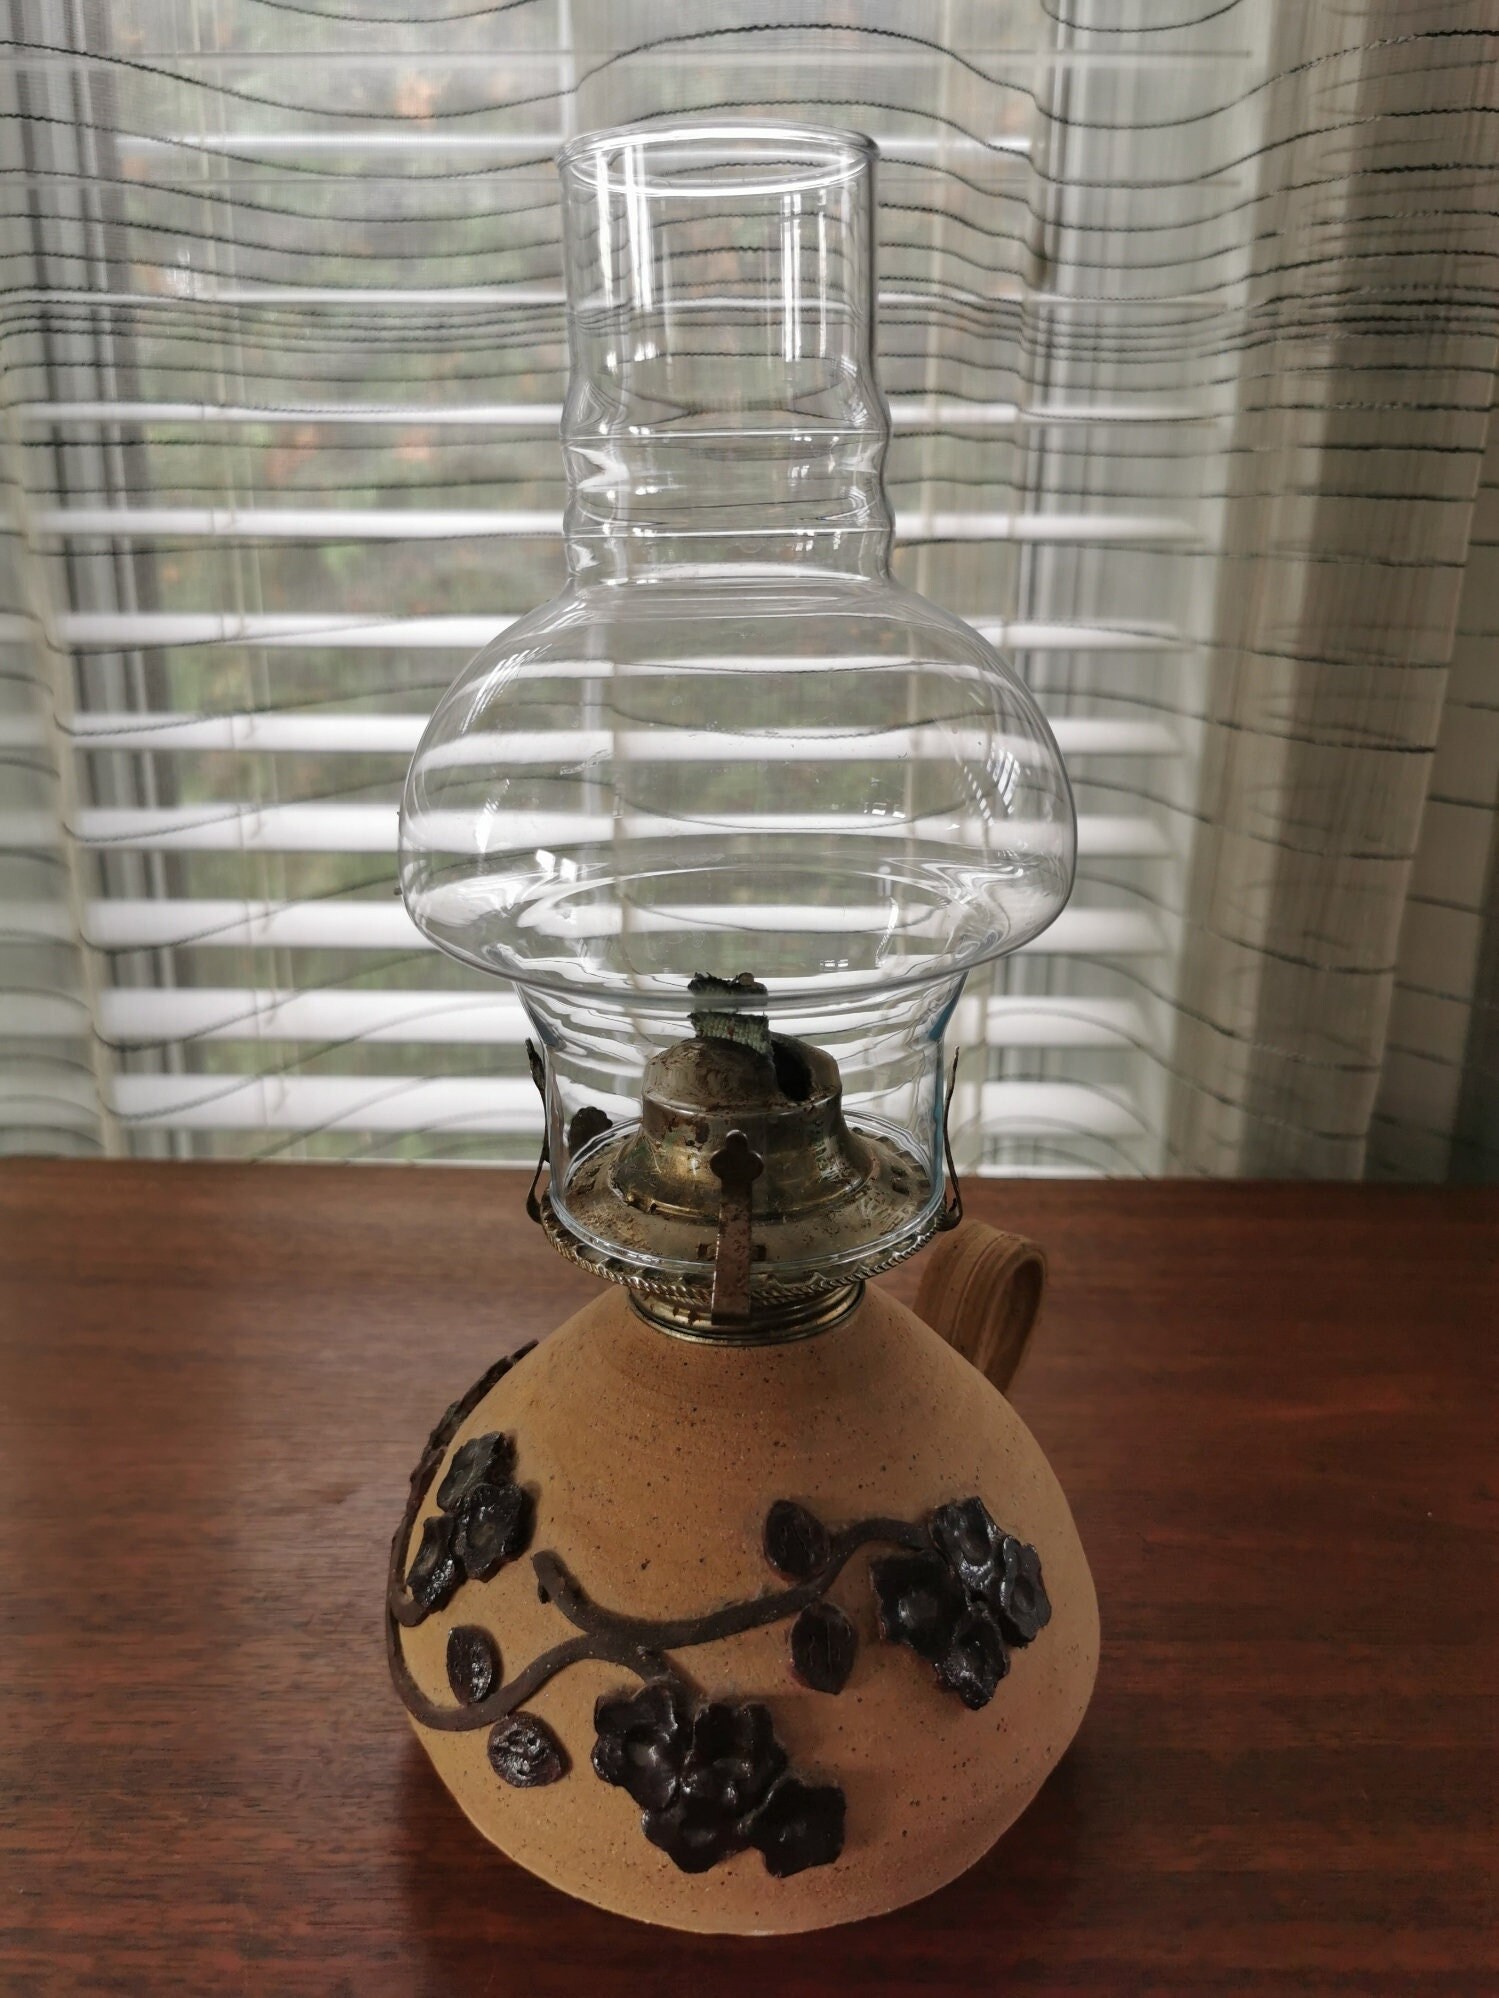 Geelin 5 Pieces Kerosene Lamp Adjustable Switch Oil Lamps for Indoor Use  Vintage Antique Glass Decorative Hurricane Lamps Burner Oil Lanterns  Chamber